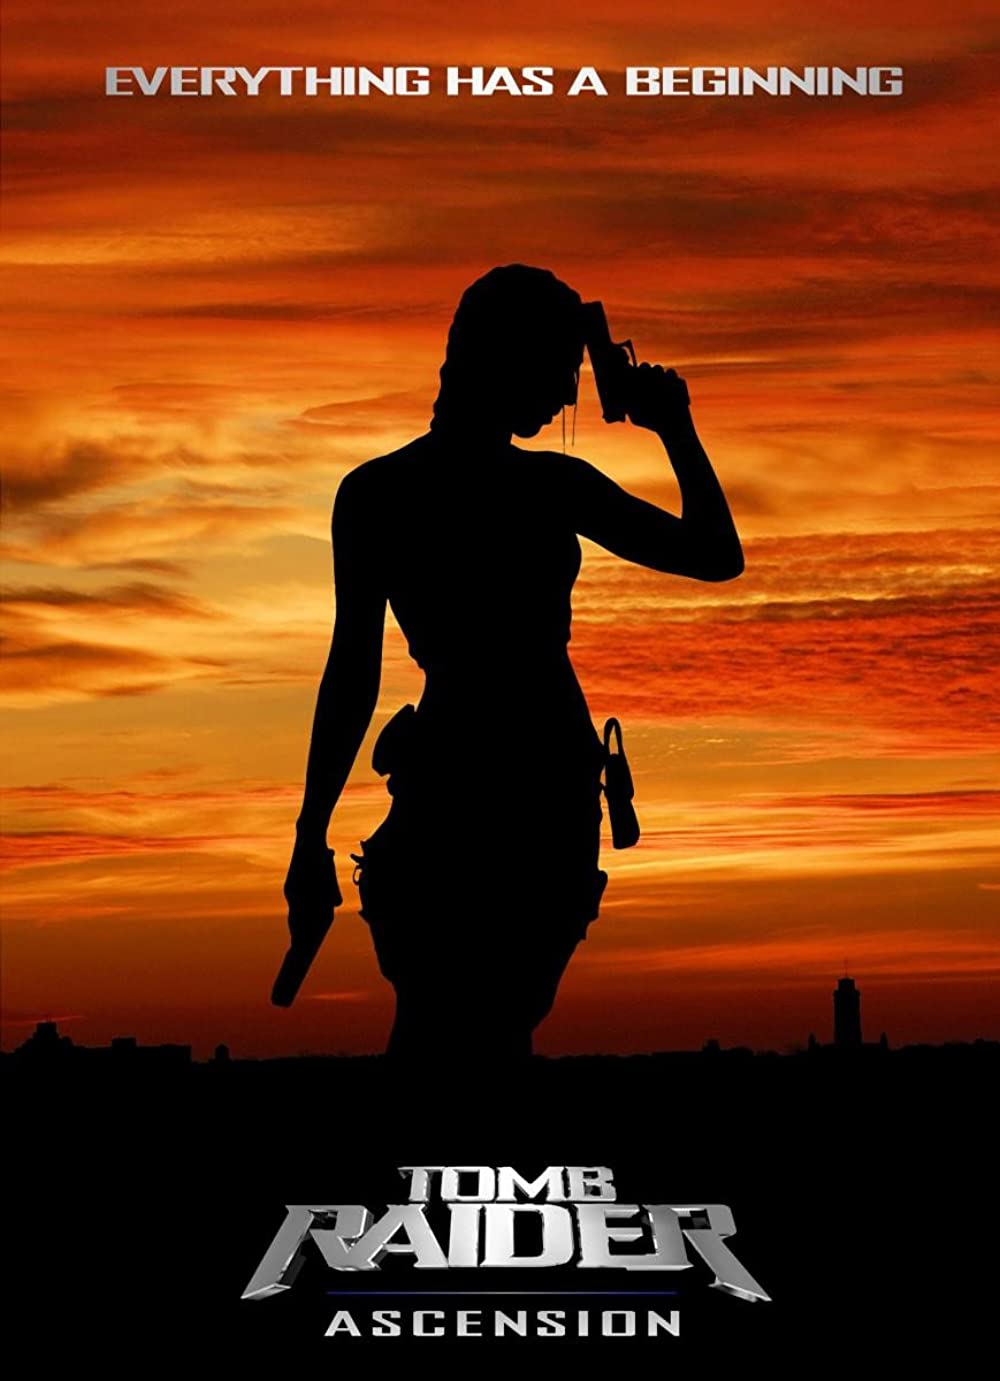 Download Tomb Raider Ascension Movie | Tomb Raider Ascension Download